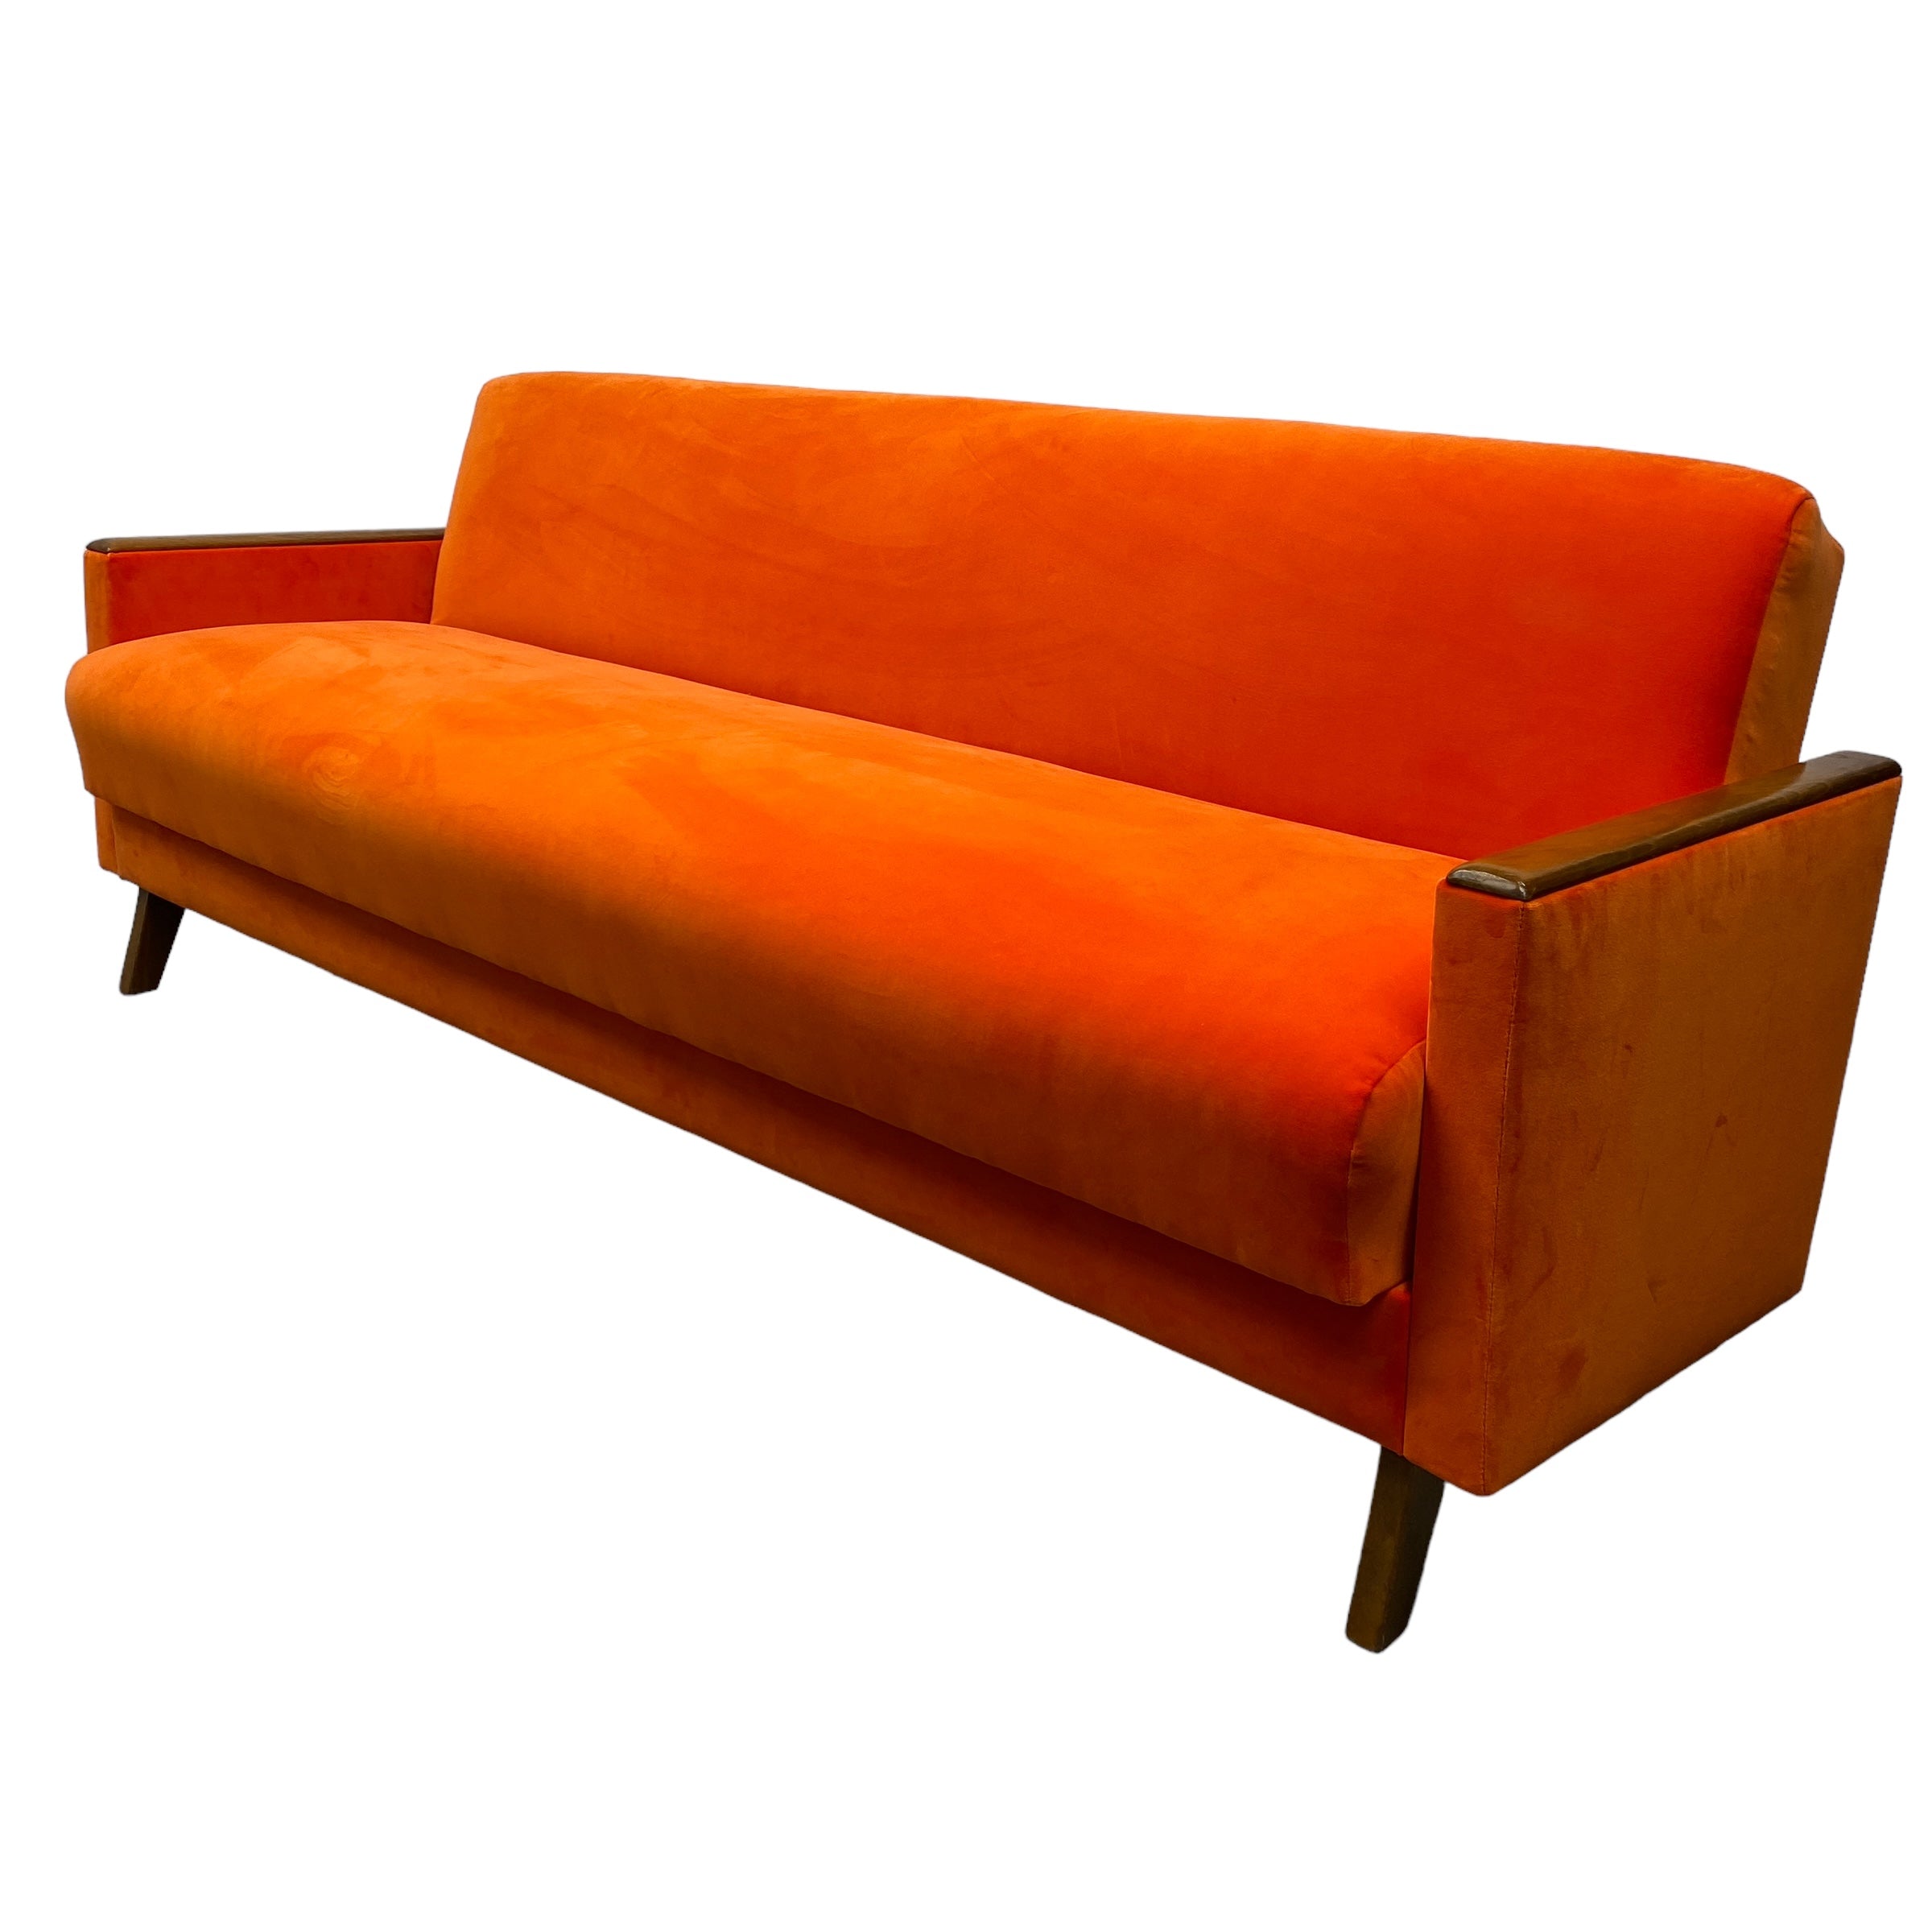 Teak Arms Czech Sofa Bed Orange Velvet Midcentury